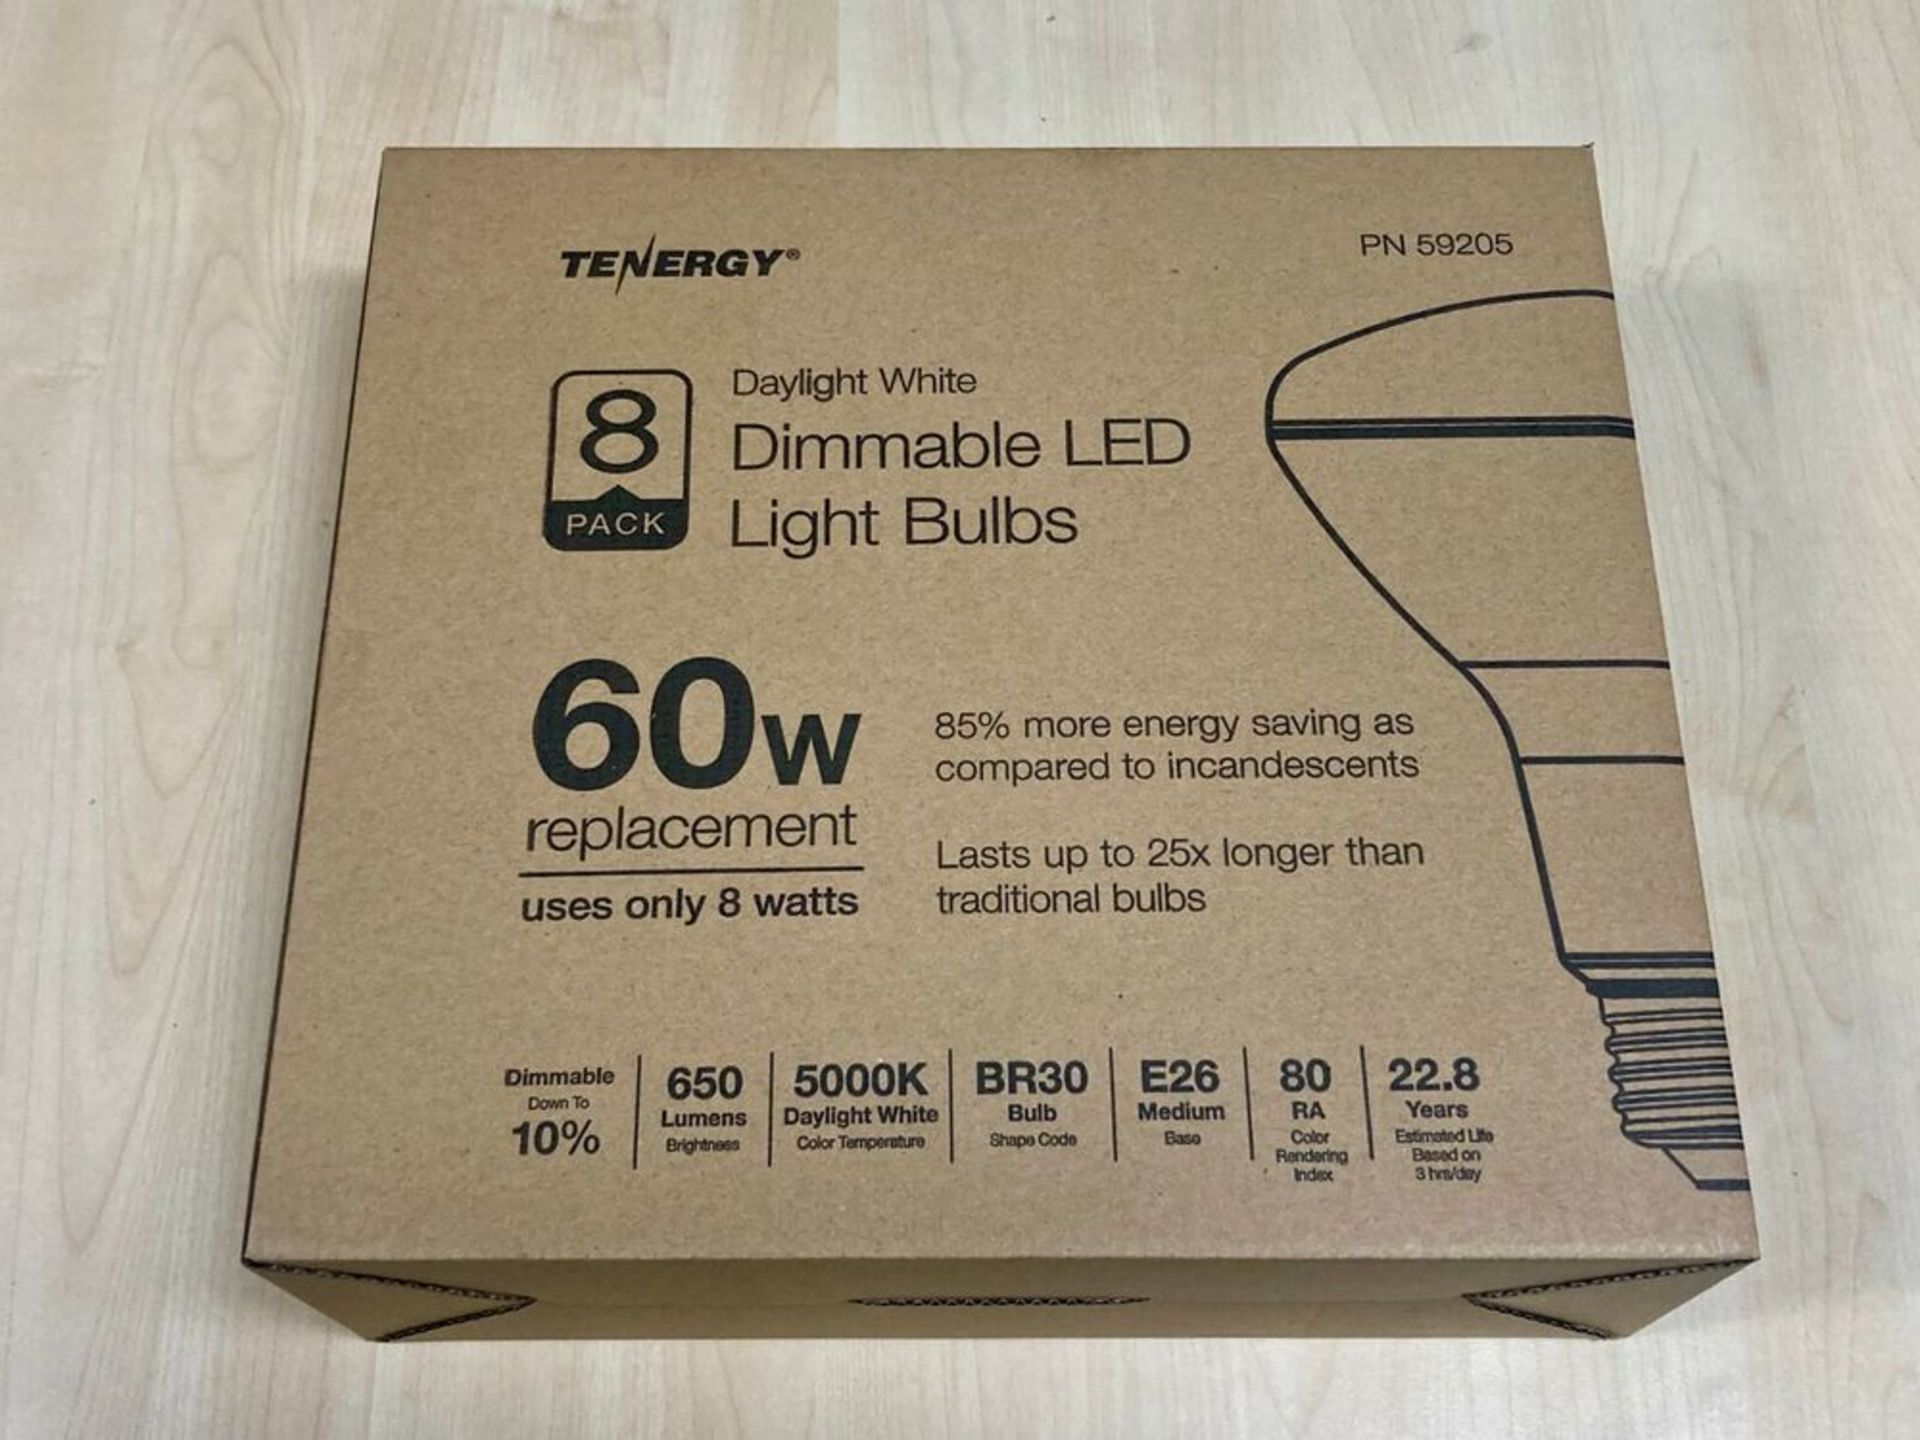 Tenergy 8 Pack Dimmable LED Light Bulbs - 8 Watts 5000K 650 Lumens - PN 59205 - Image 2 of 4